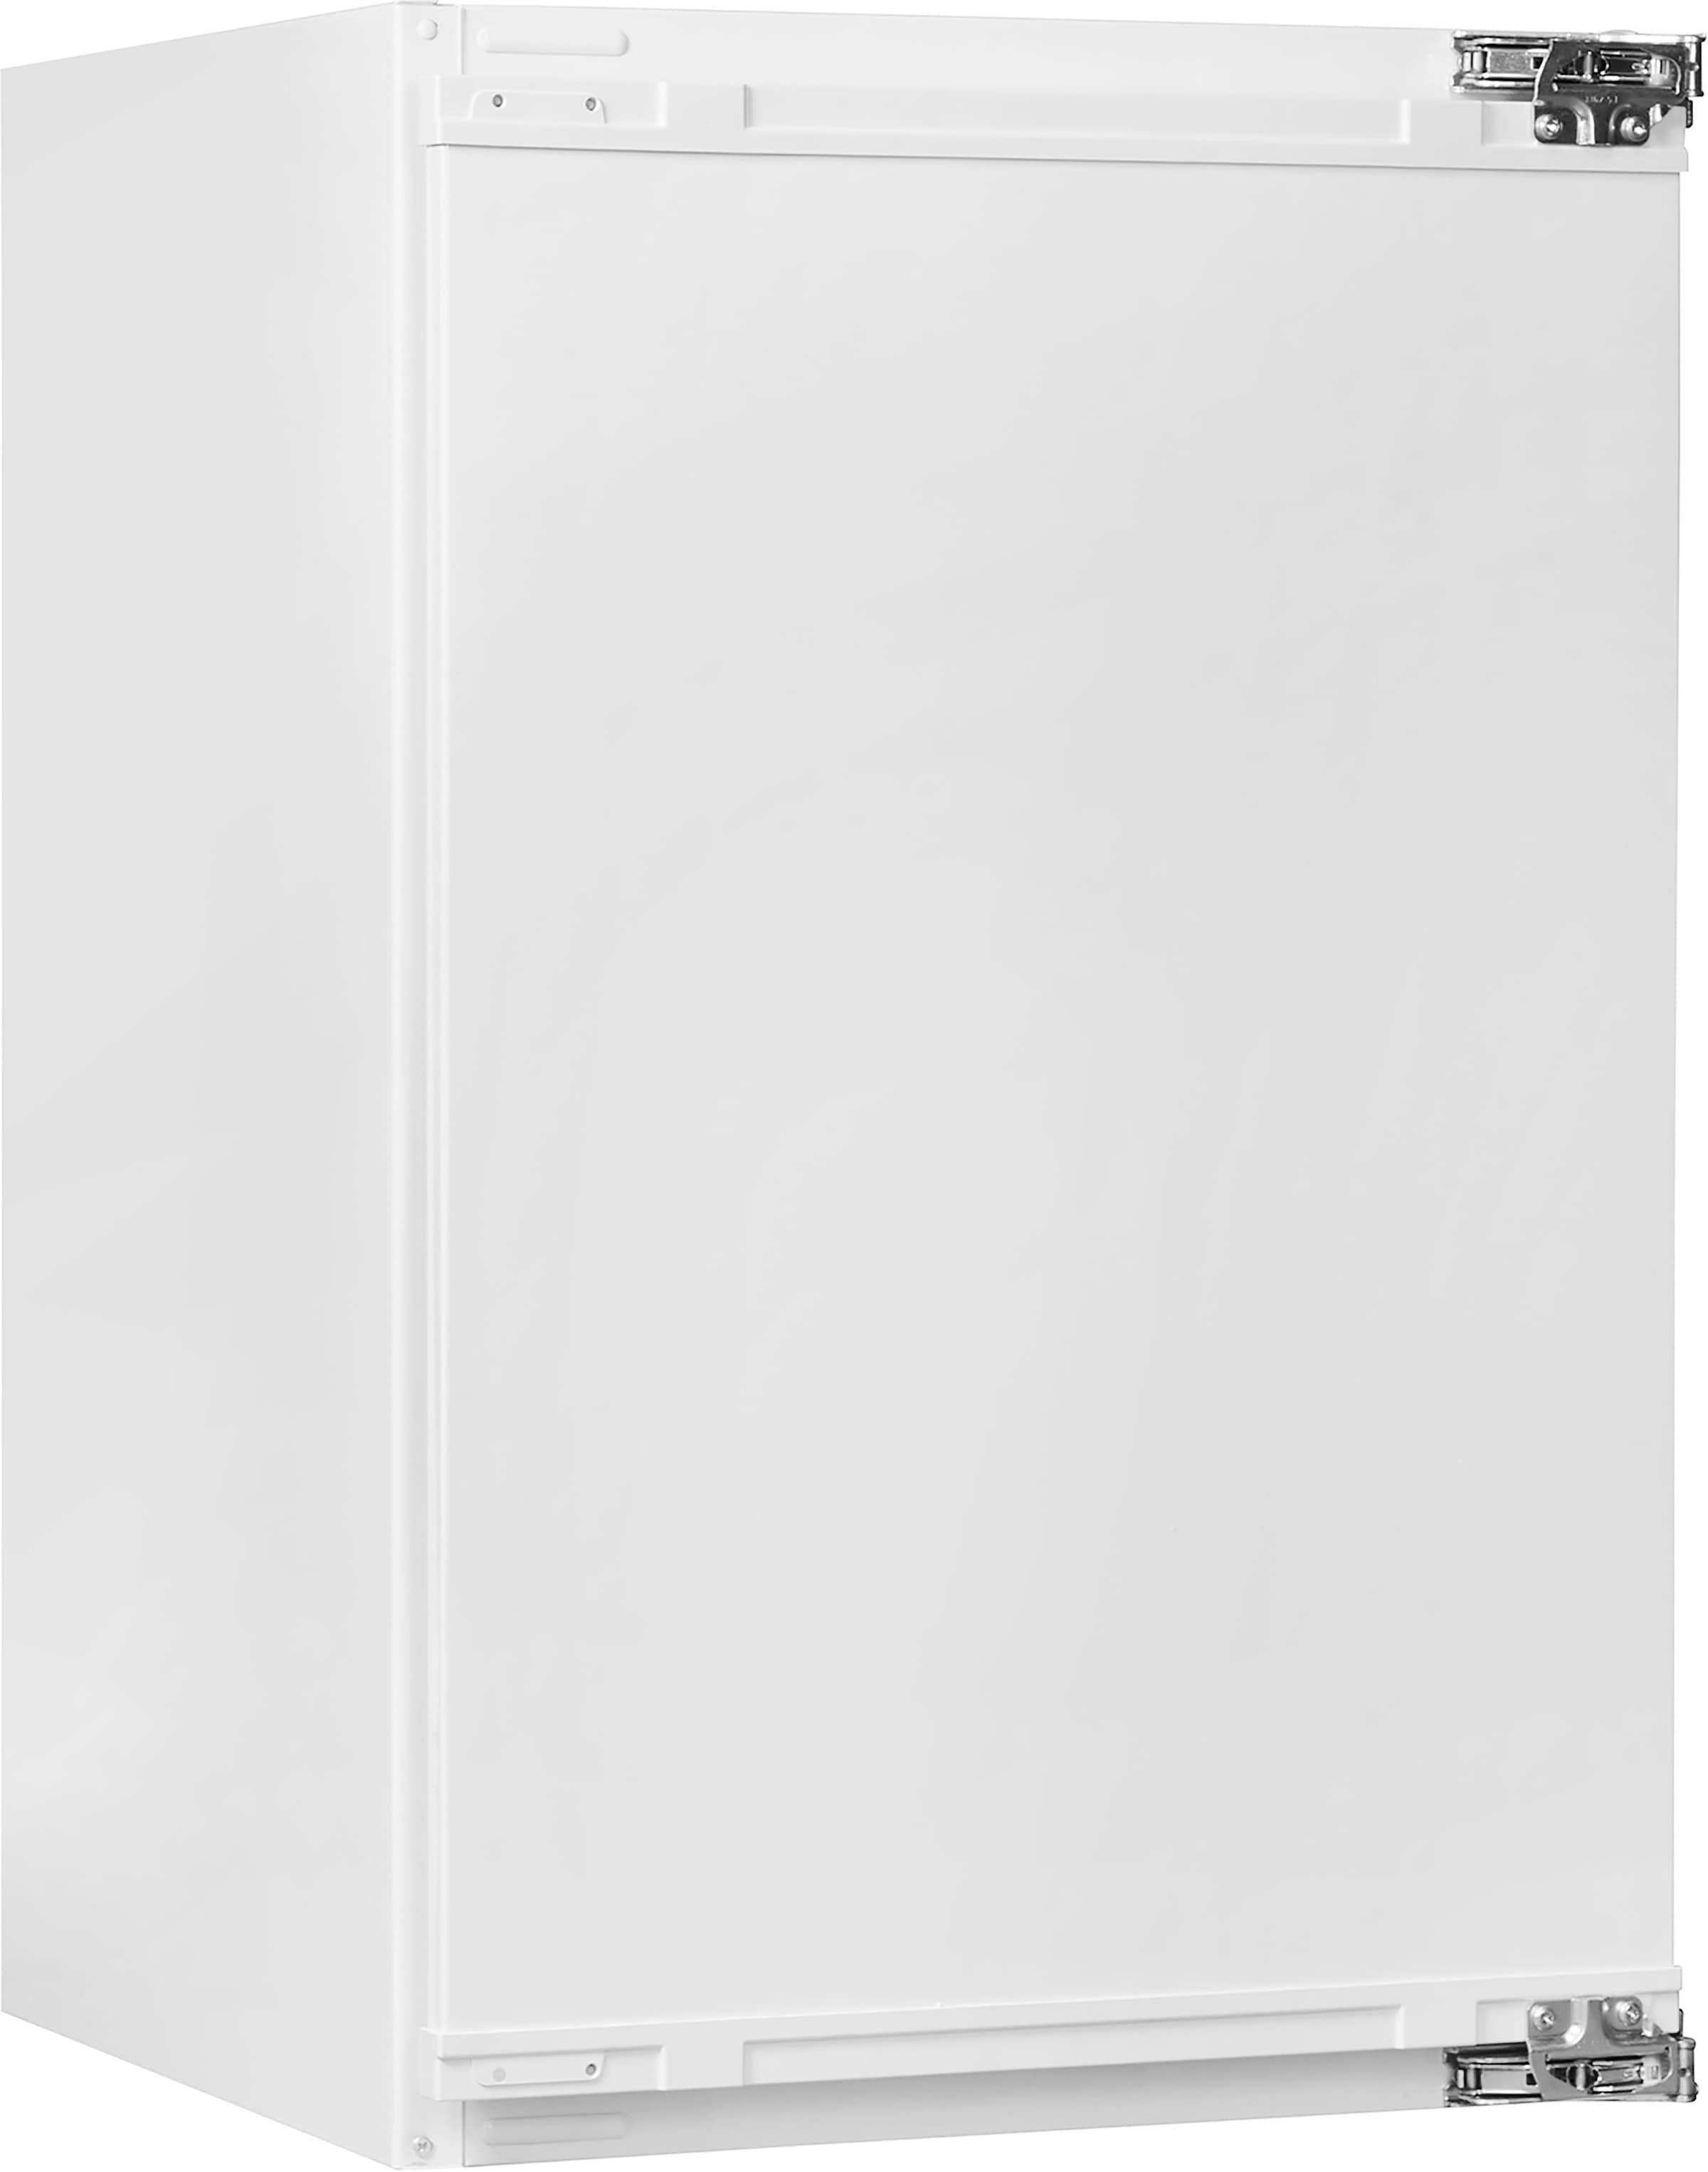 BEKO Einbaukühlschrank »B1754FN«, B1754FN, 86,6 cm hoch, 54,5 cm breit